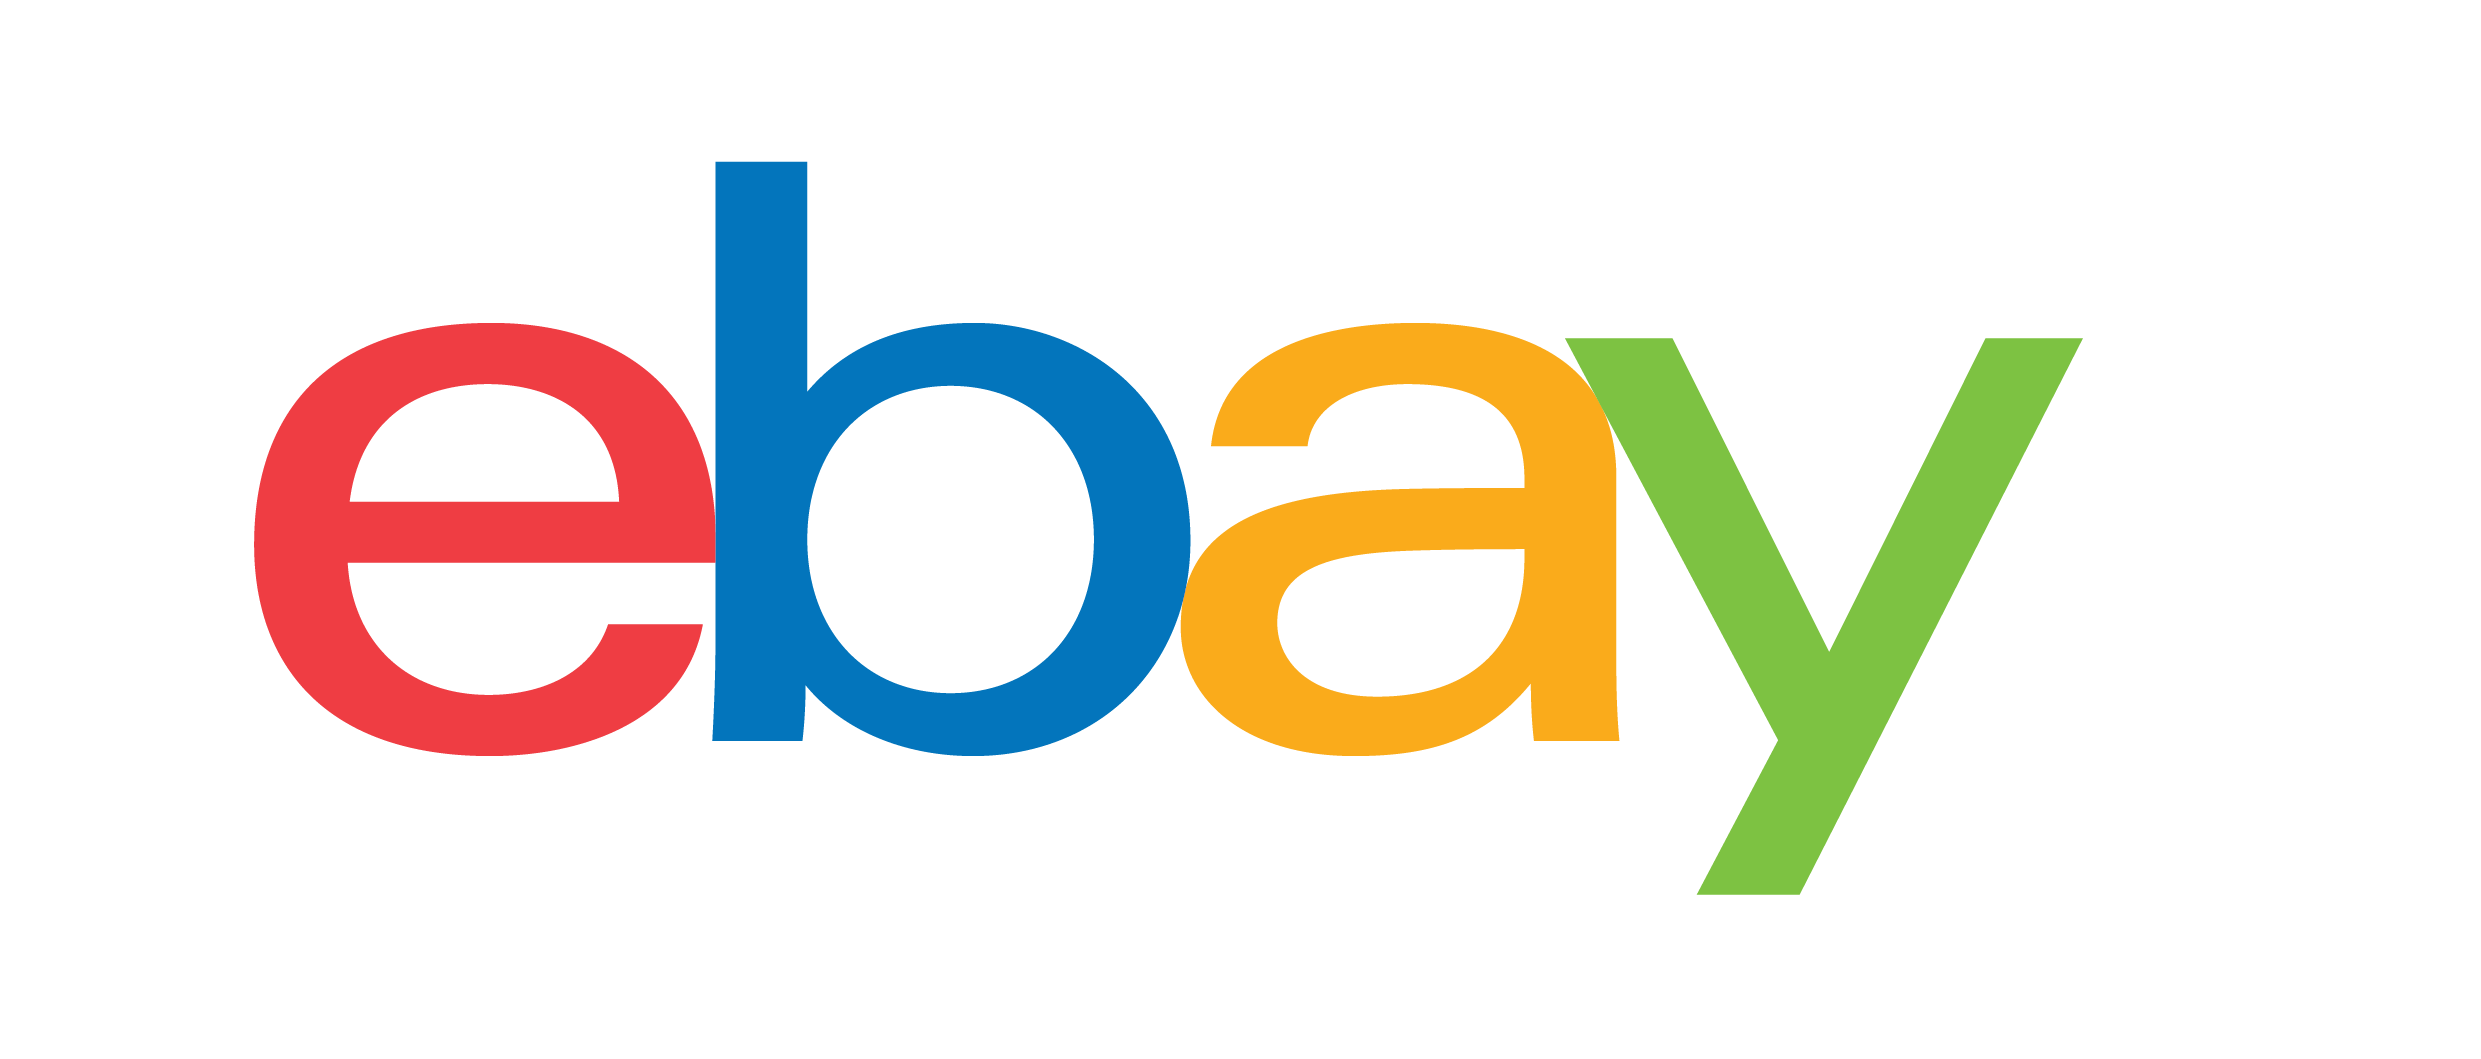 eBay のロゴ。